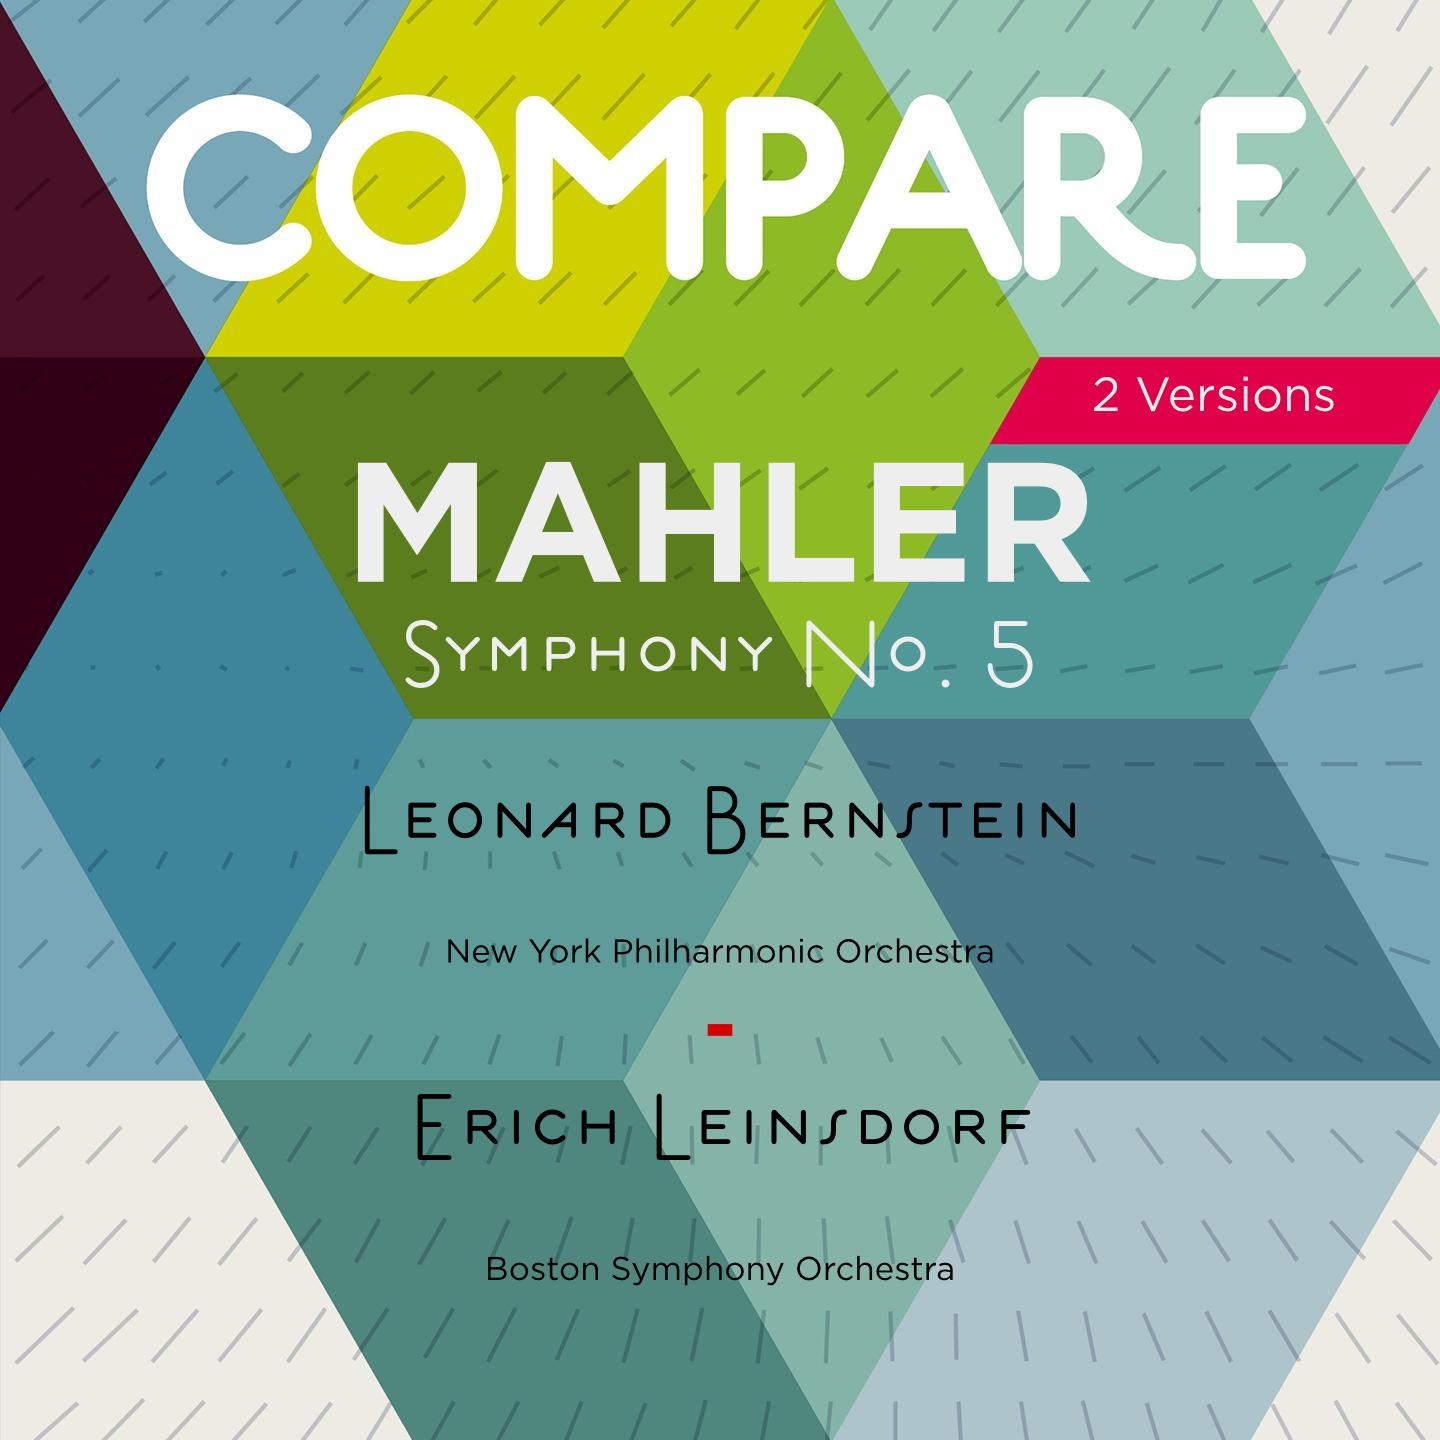 Mahler: Symphony No. 5, Leonard Bernstein vs. Erich Leinsdorf